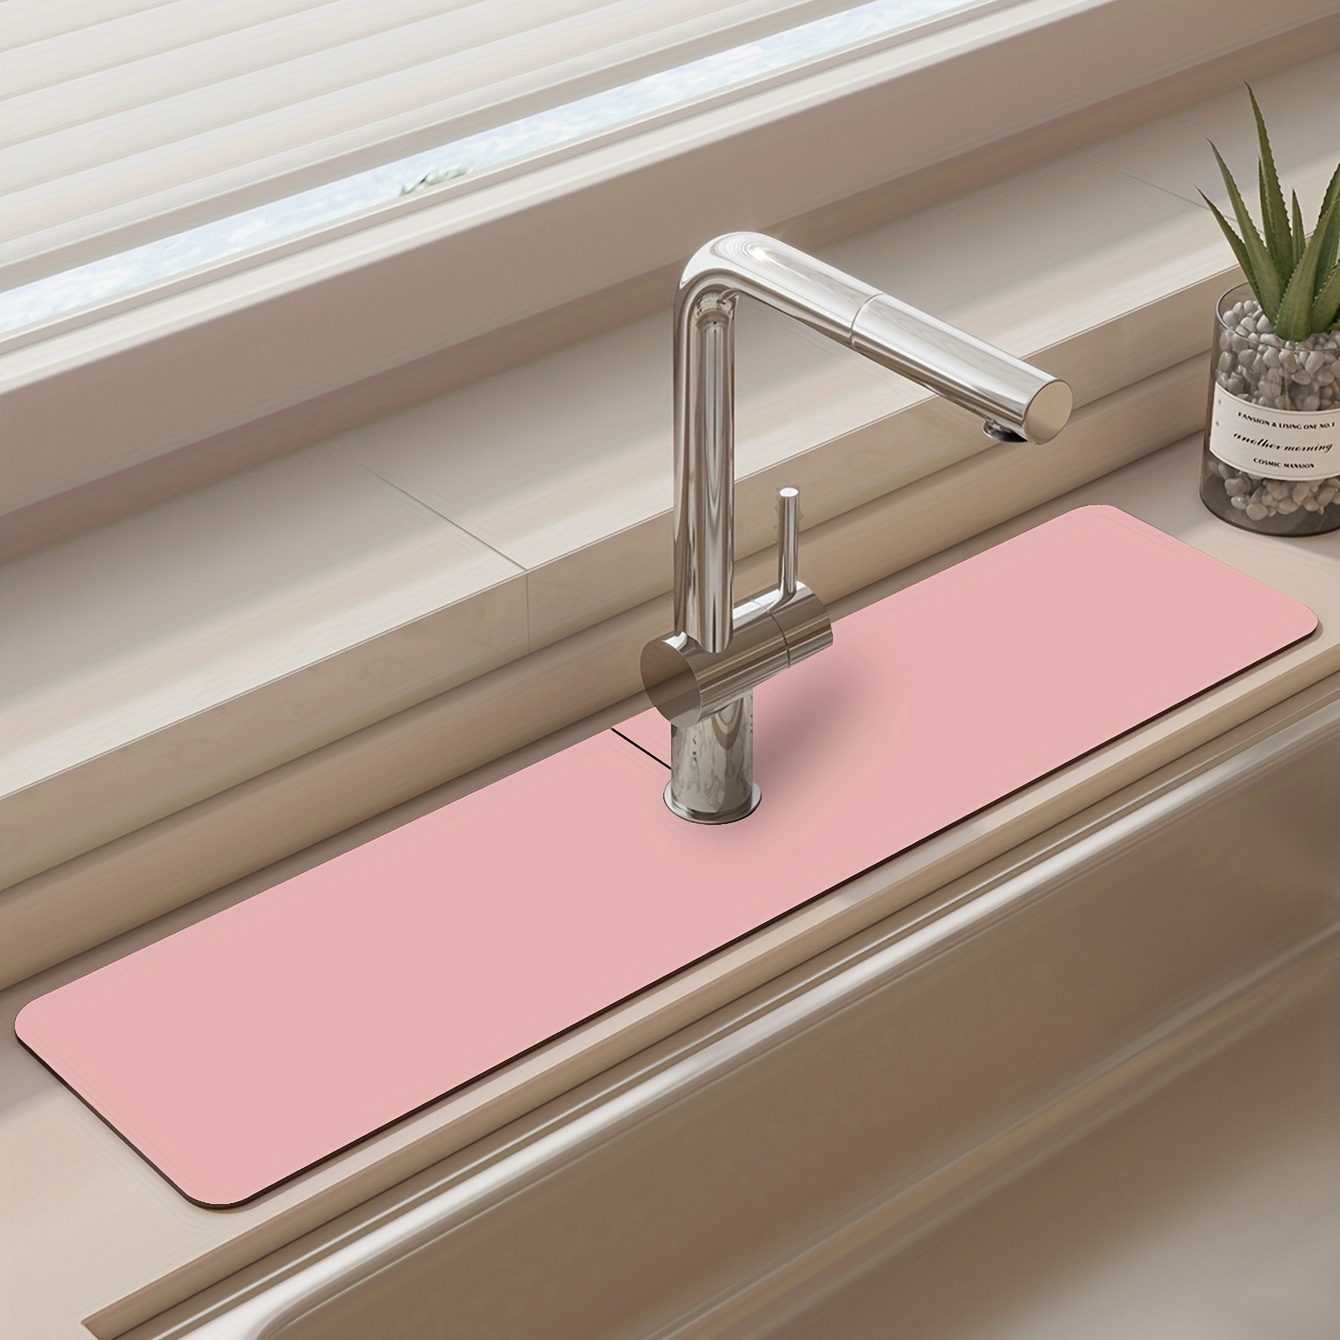 Pompotops Kitchen Sink Splash Guard,Faucet Countertop Suction Pad Can Be Cut, Kitchen, Bathroom, Wash Basin Drainage Pad, Narrow Diatomaceous Mud Pad